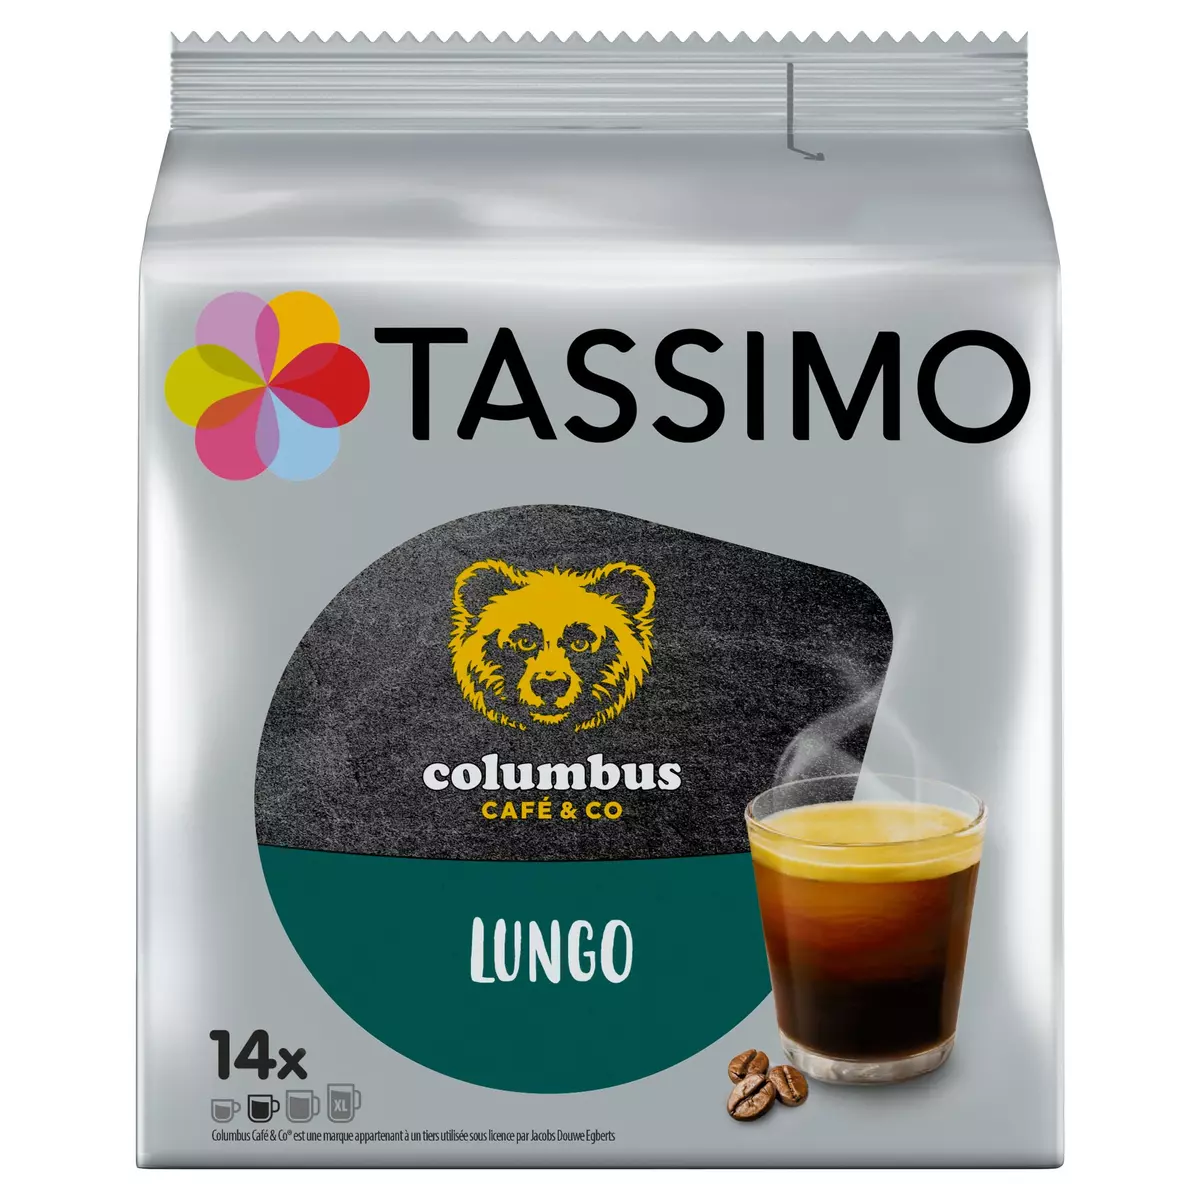 TASSIMO Dosettes de café columbus lungo 14 dosettes 90g pas cher